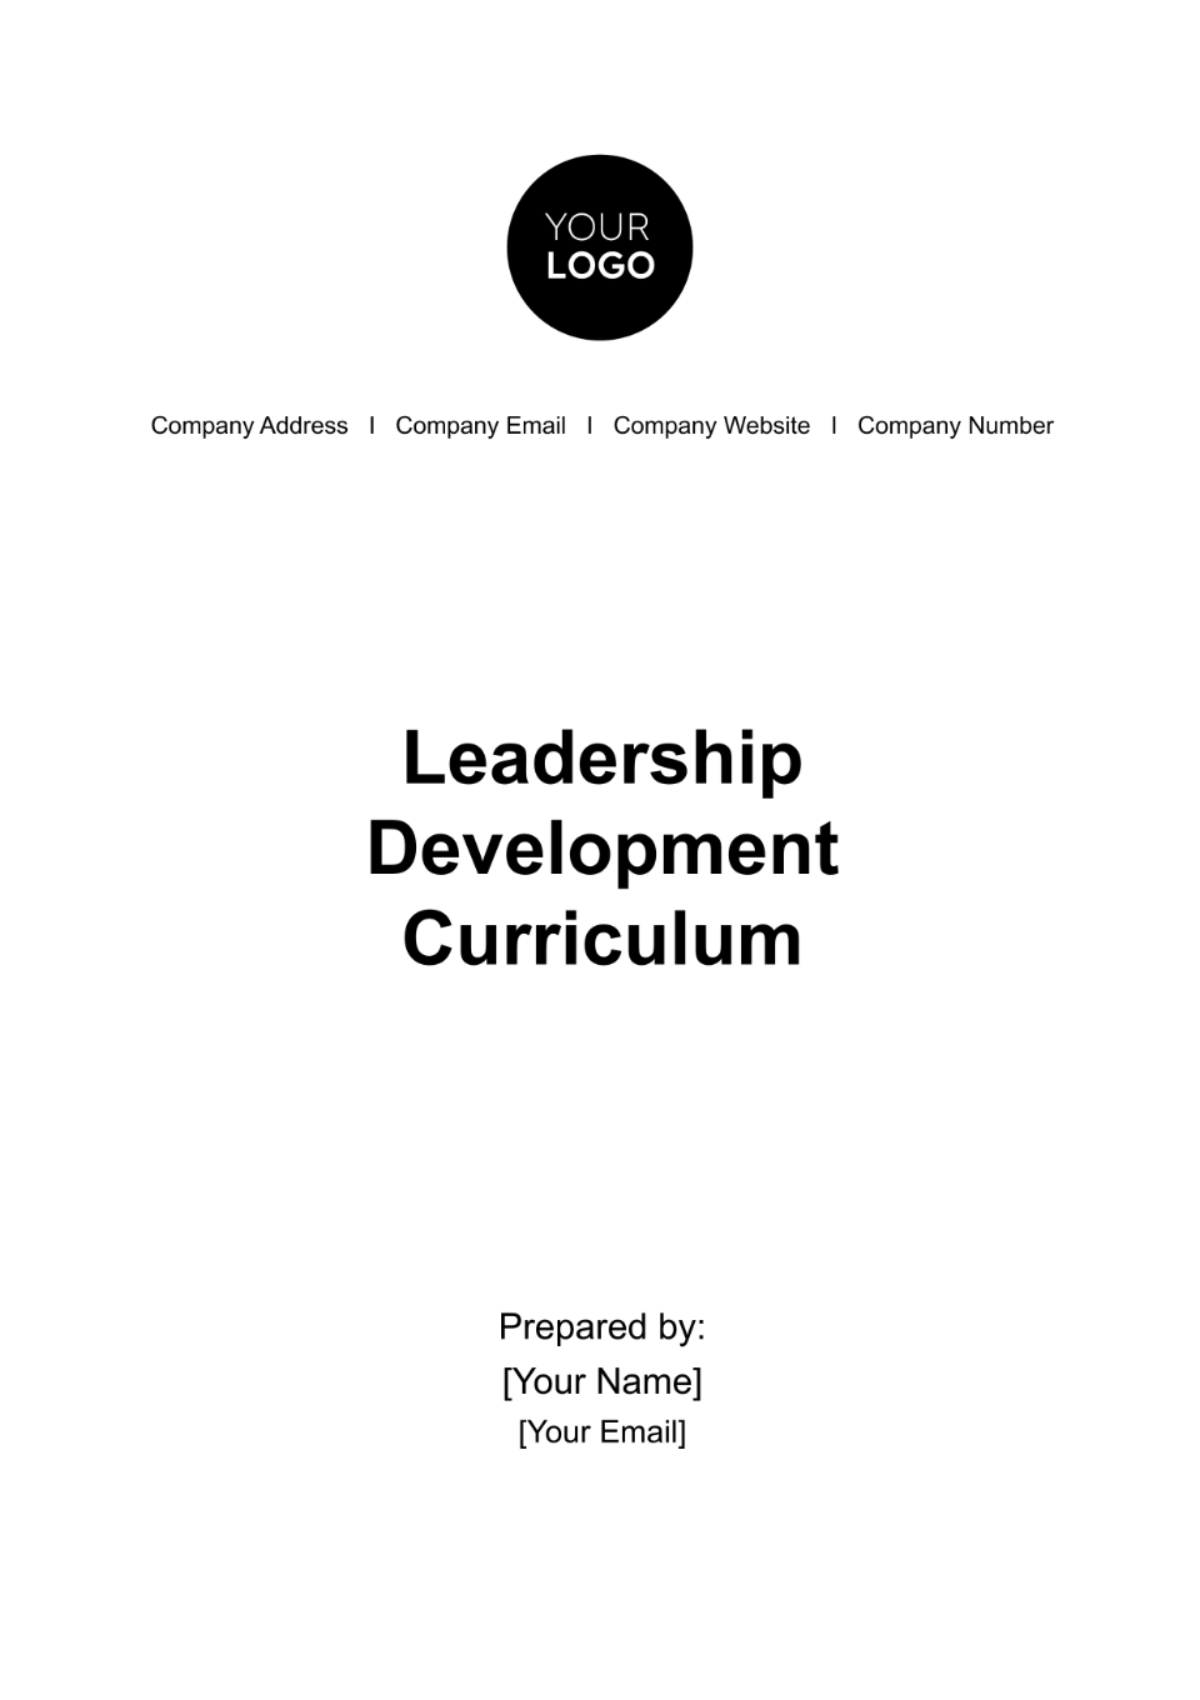 Free Leadership Development Curriculum HR Template